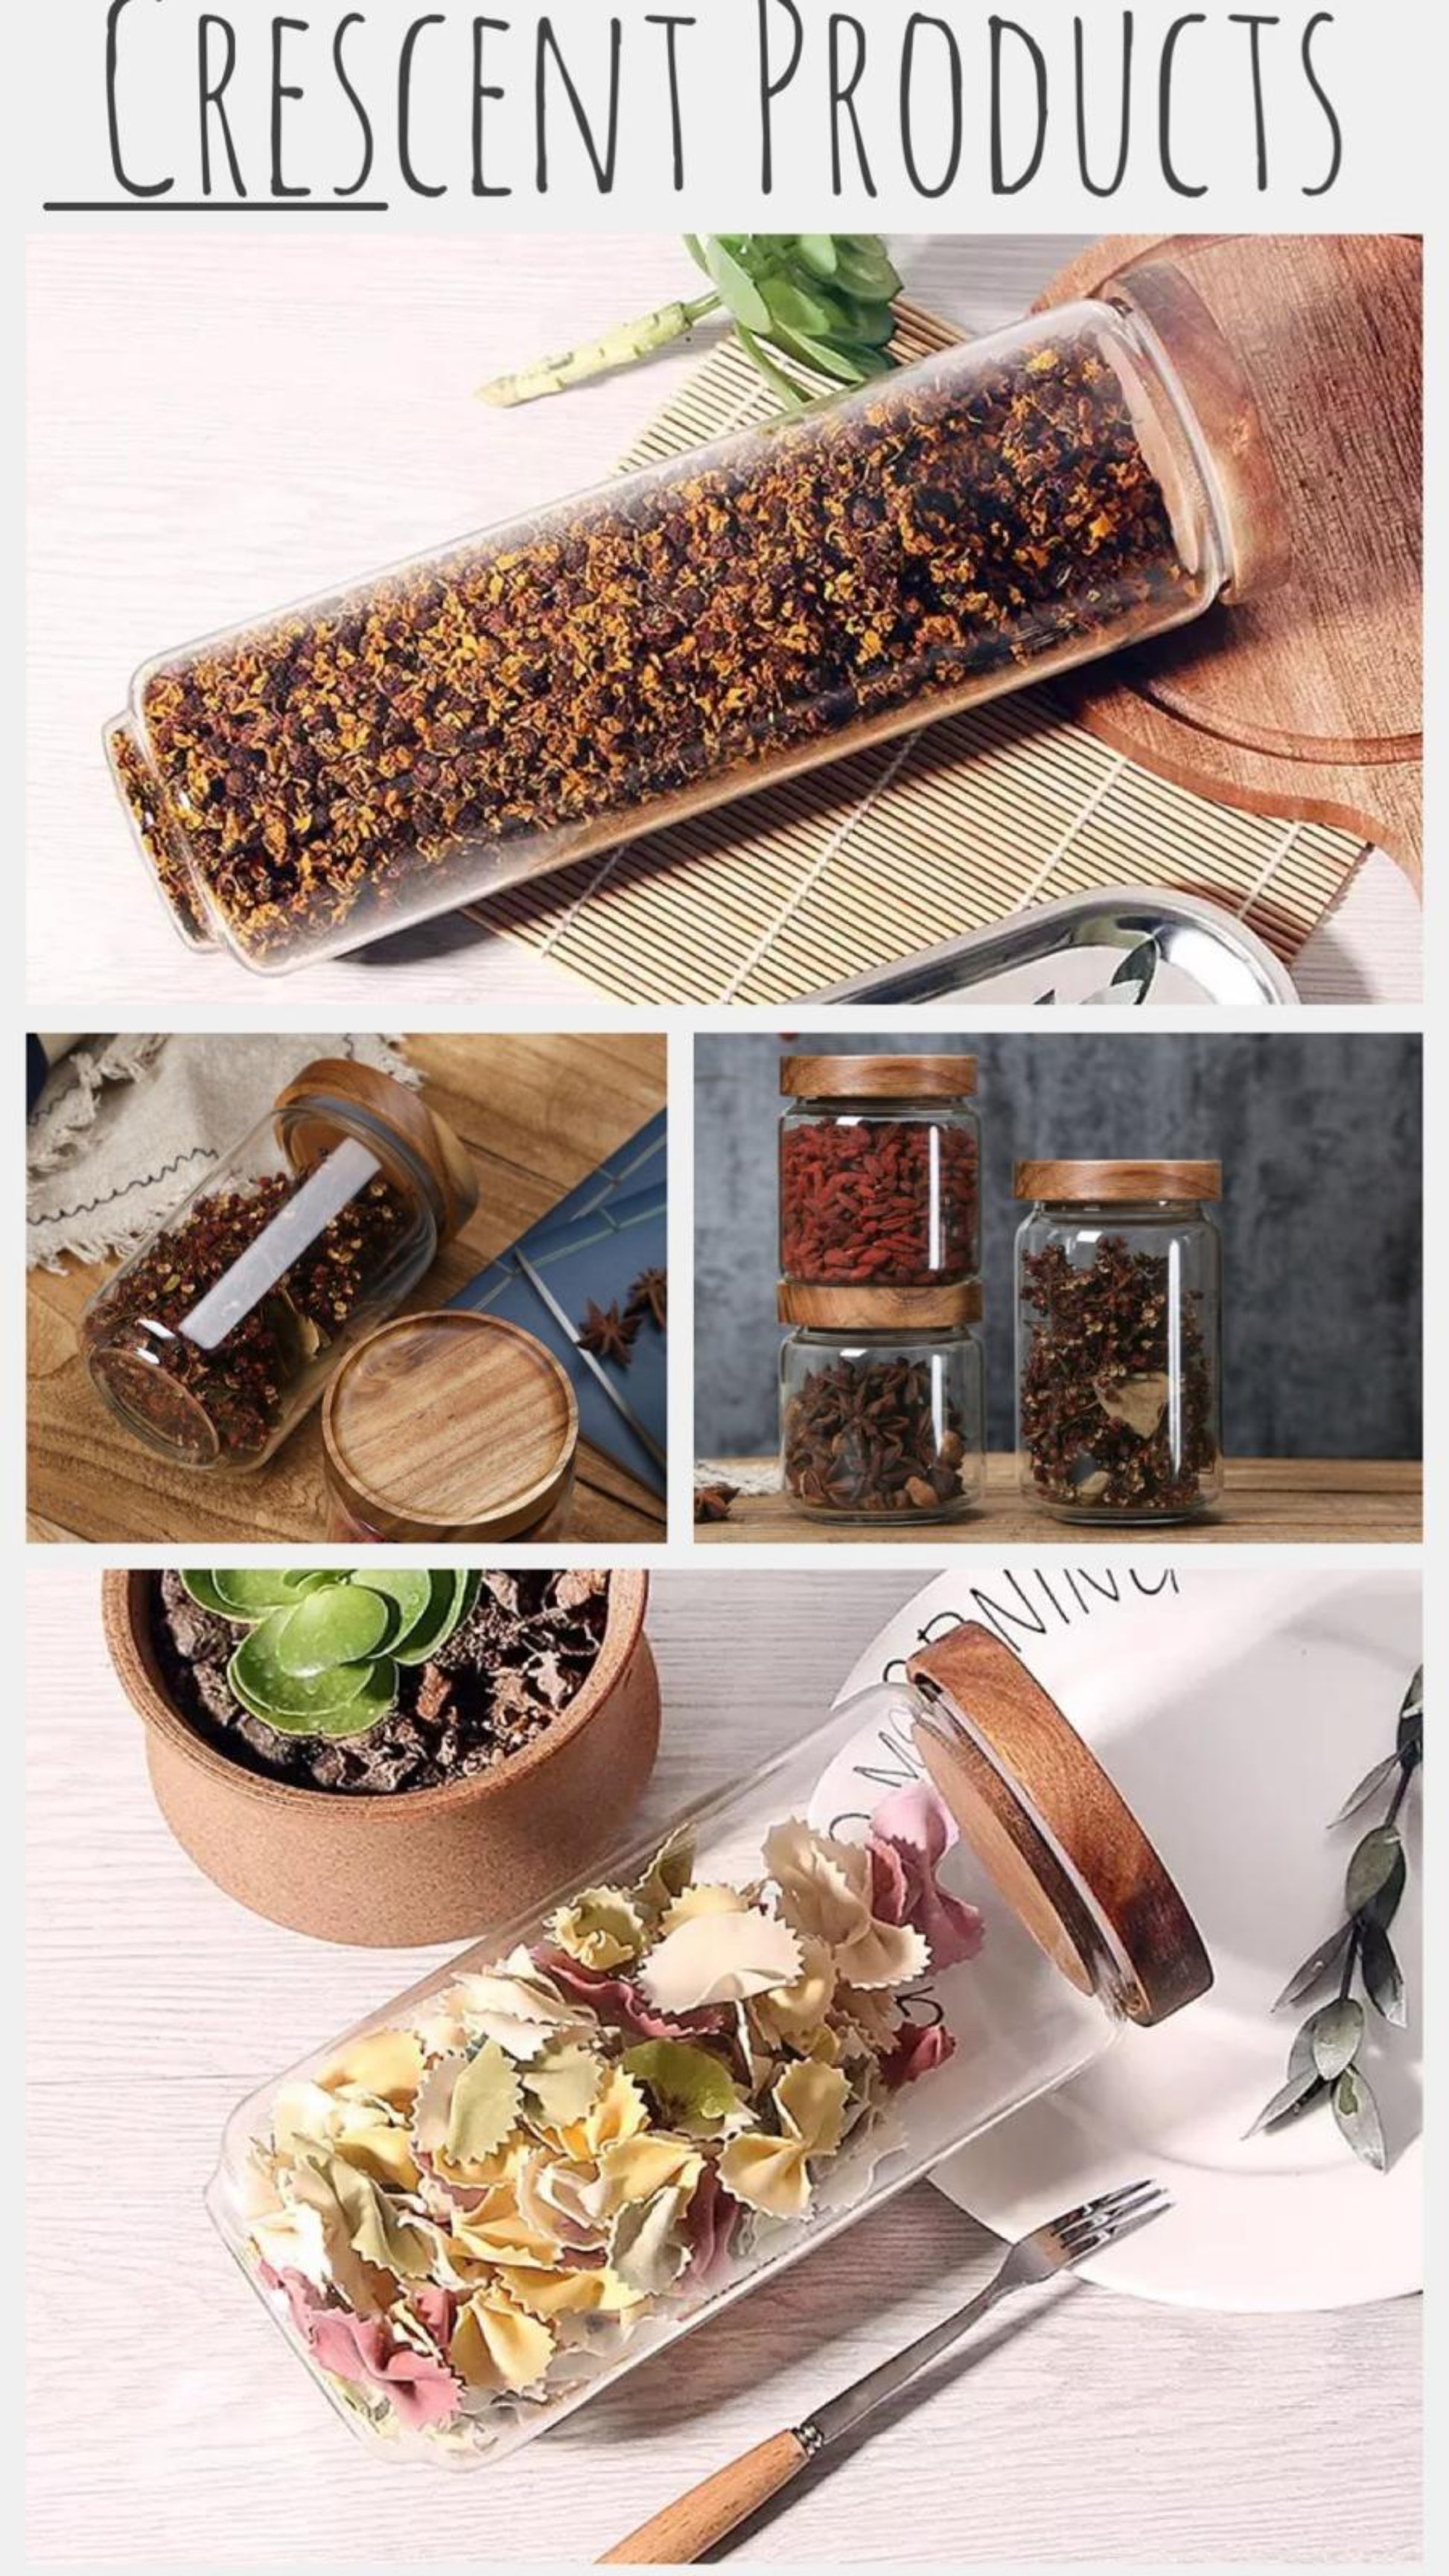 HIMAYA Glass Spice Jars With Natural Acacia Wood Lids Size -  UK